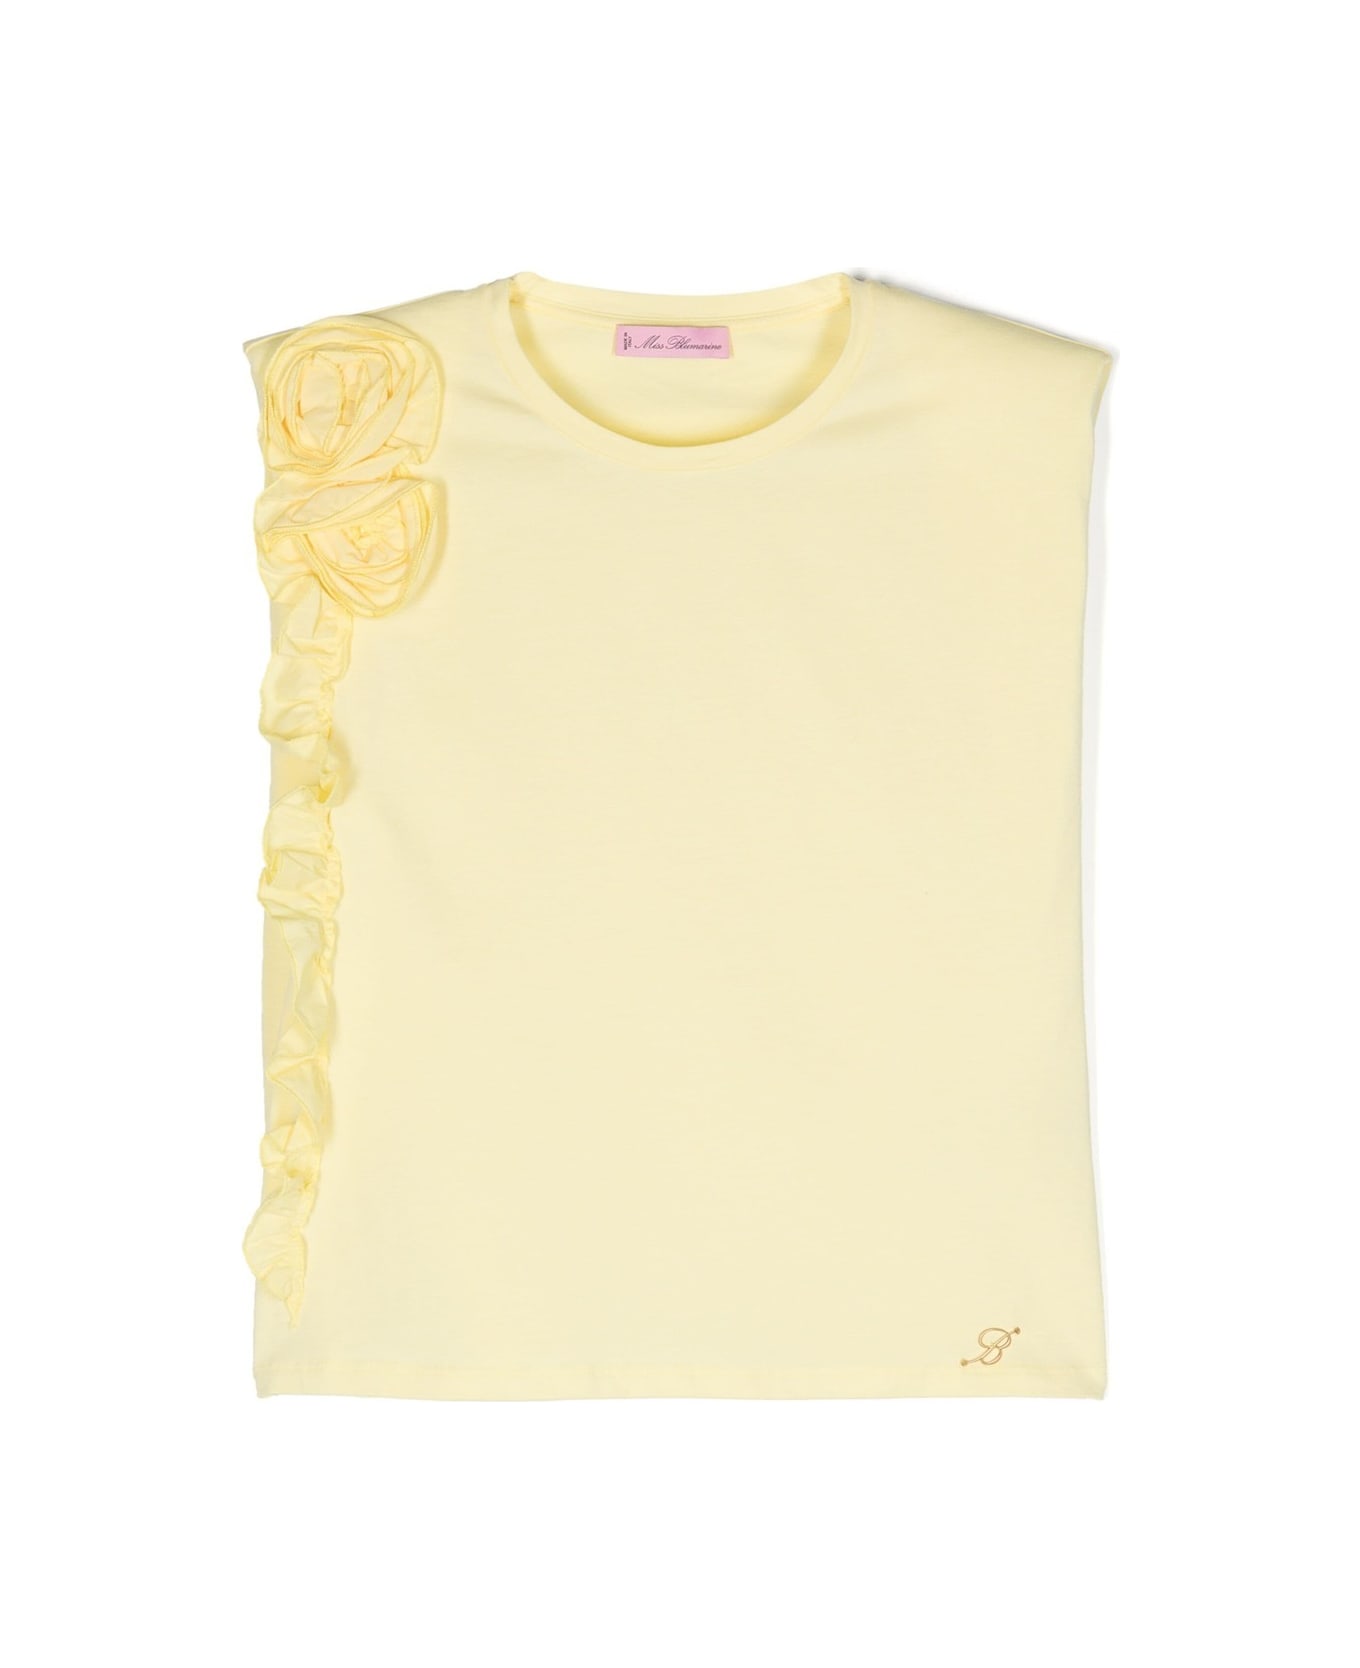 Miss Blumarine Pastel Yellow T-shirt With Flowers And Ruffles - Giallo